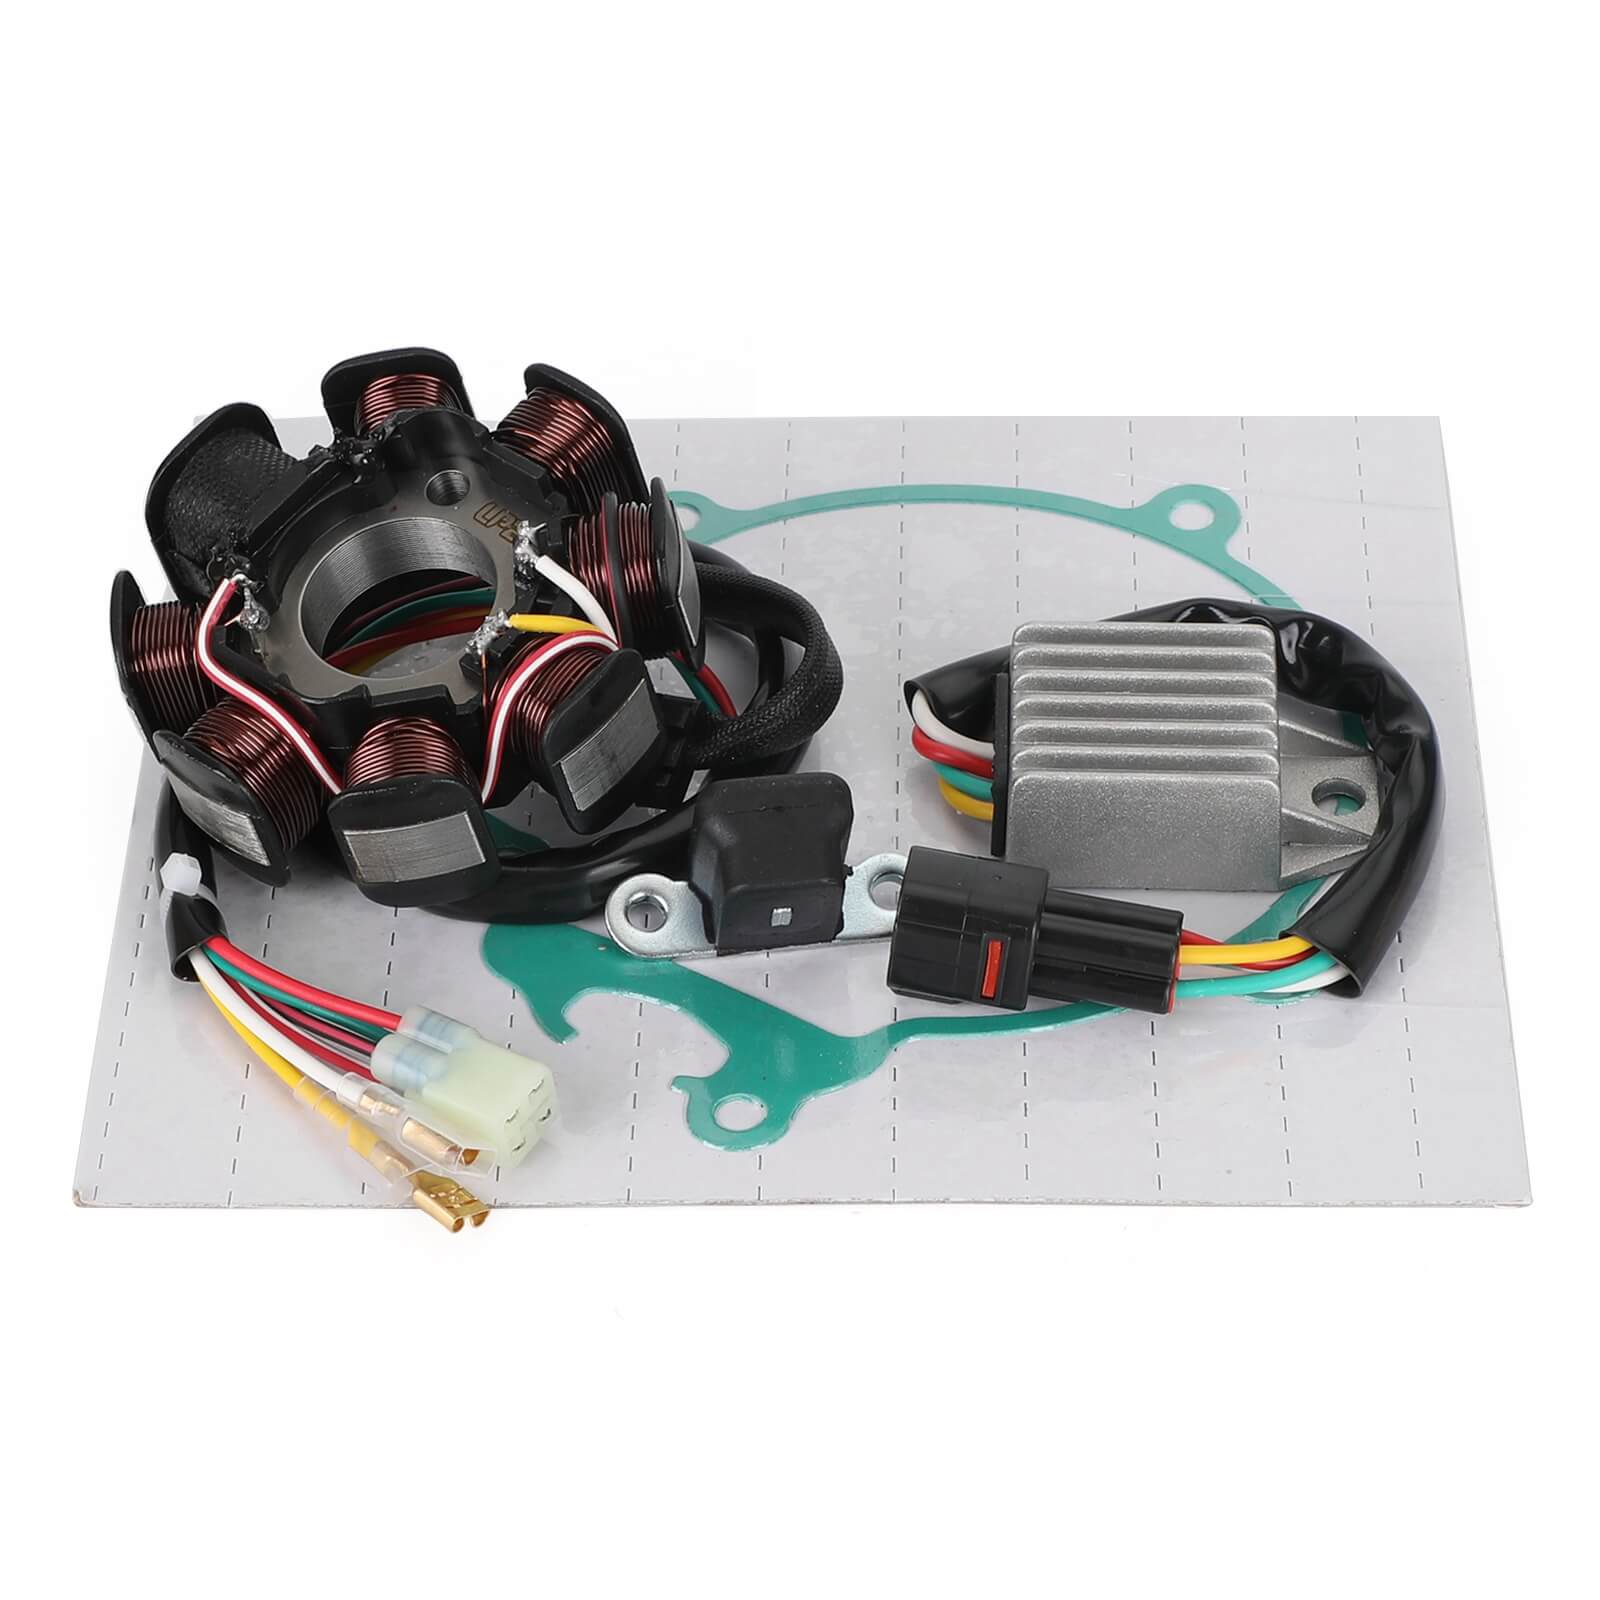 Magneto Coil Stator + Voltage Regulator + Gasket Assy Fit for Husaberg TE250 TE300 11-14